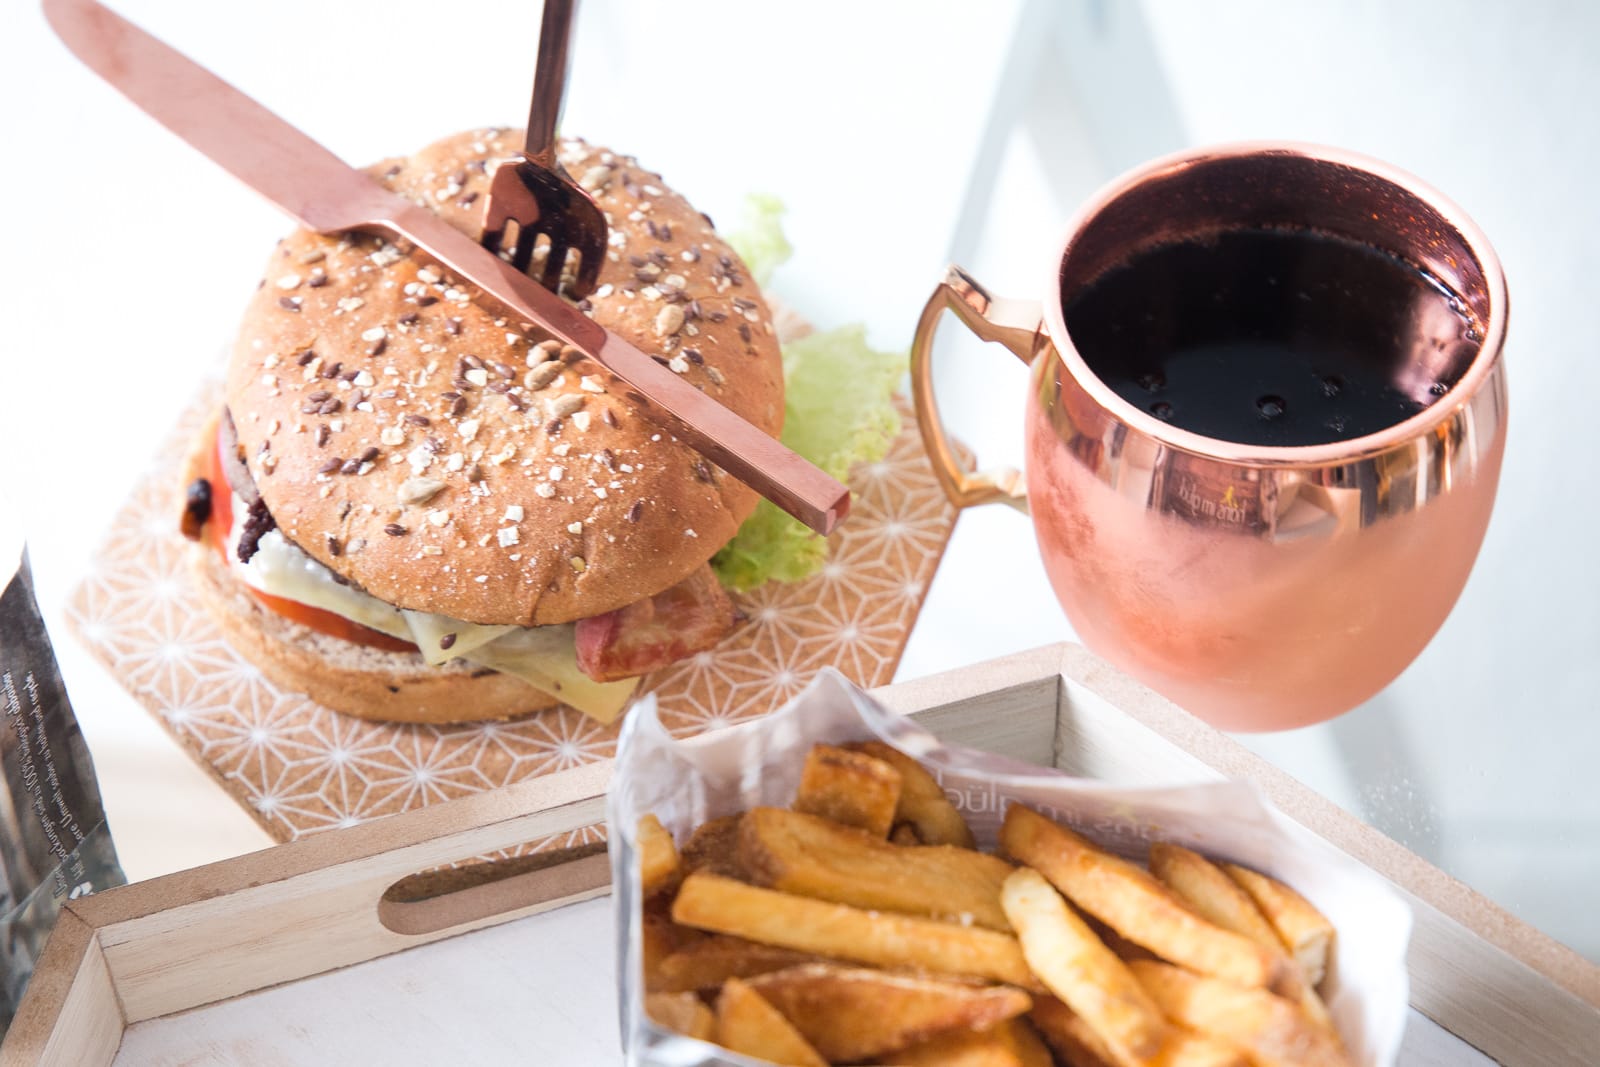 Burger Dinner à la New York City: Bestellen via Deliveroo in Köln